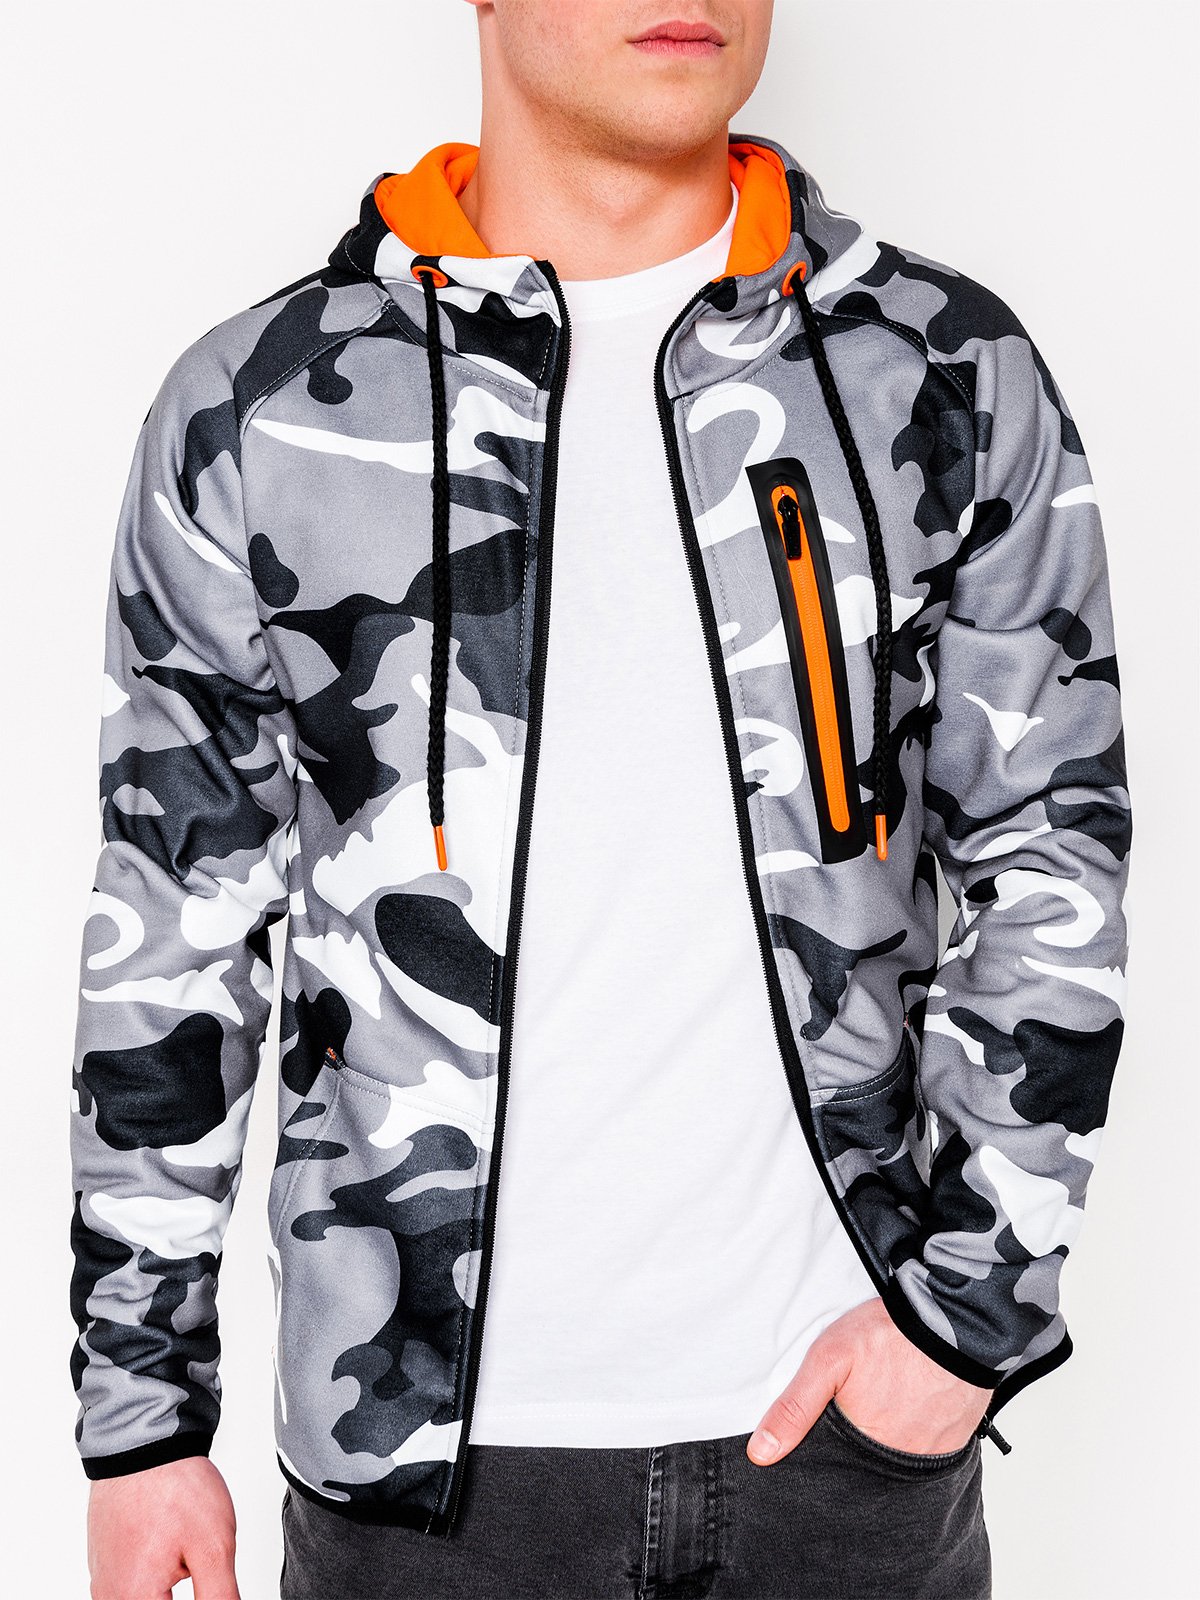 Buy > camouflage hoodie wholesale > in stock